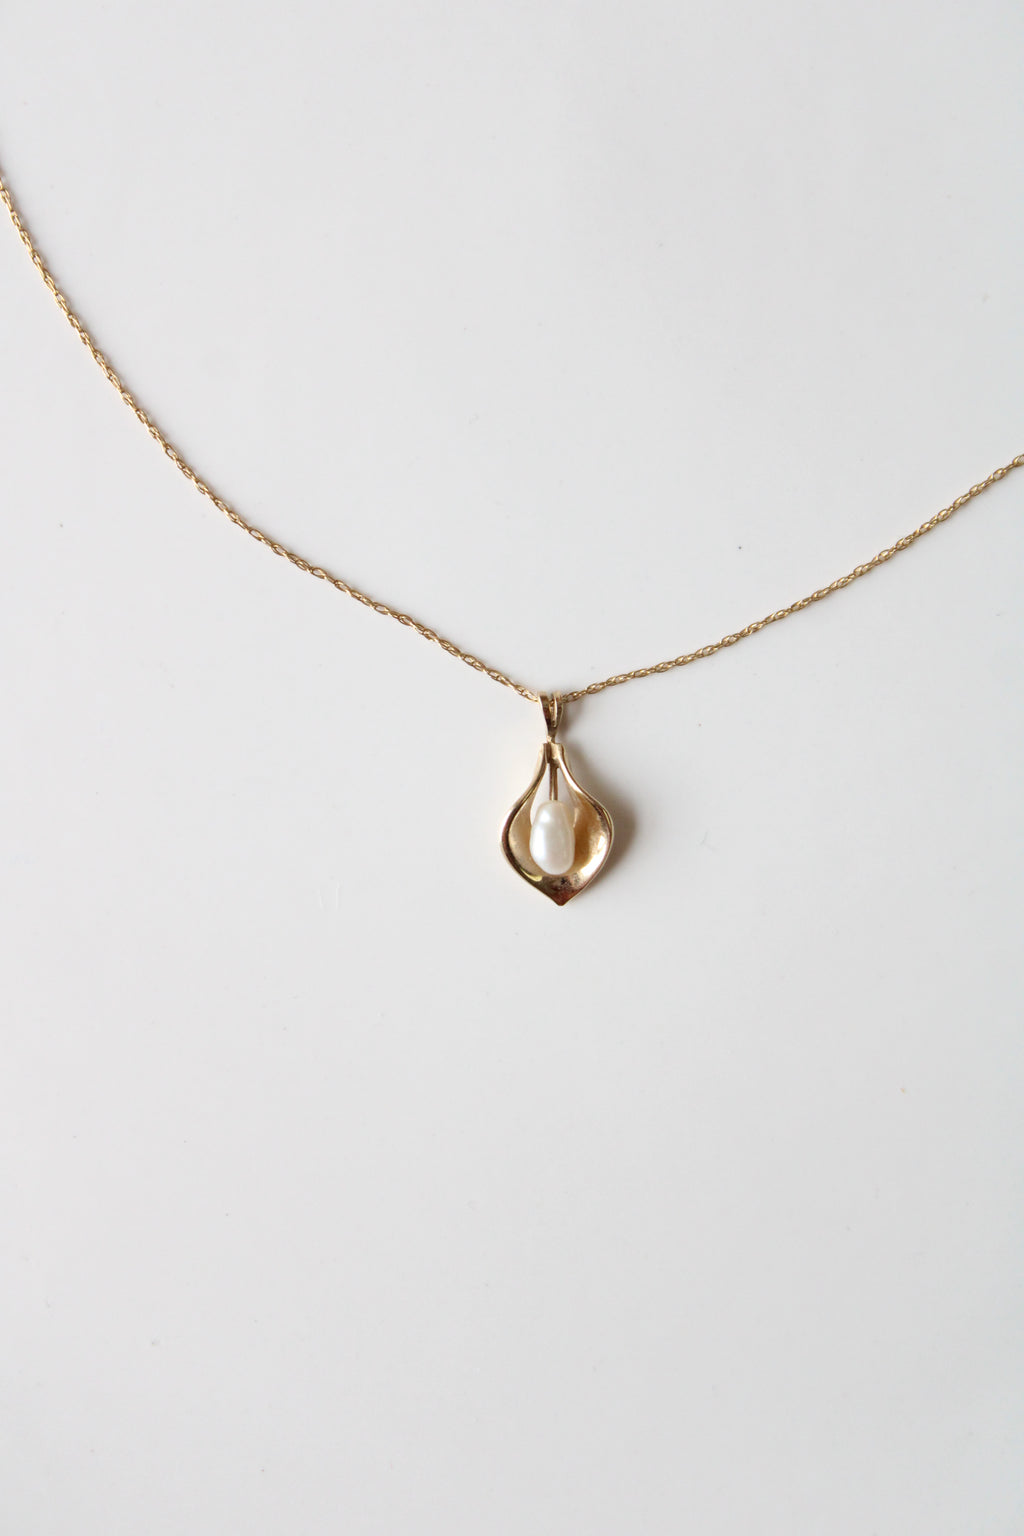 Calla Lily Genuine Pearl Pendant 14KT Gold Necklace